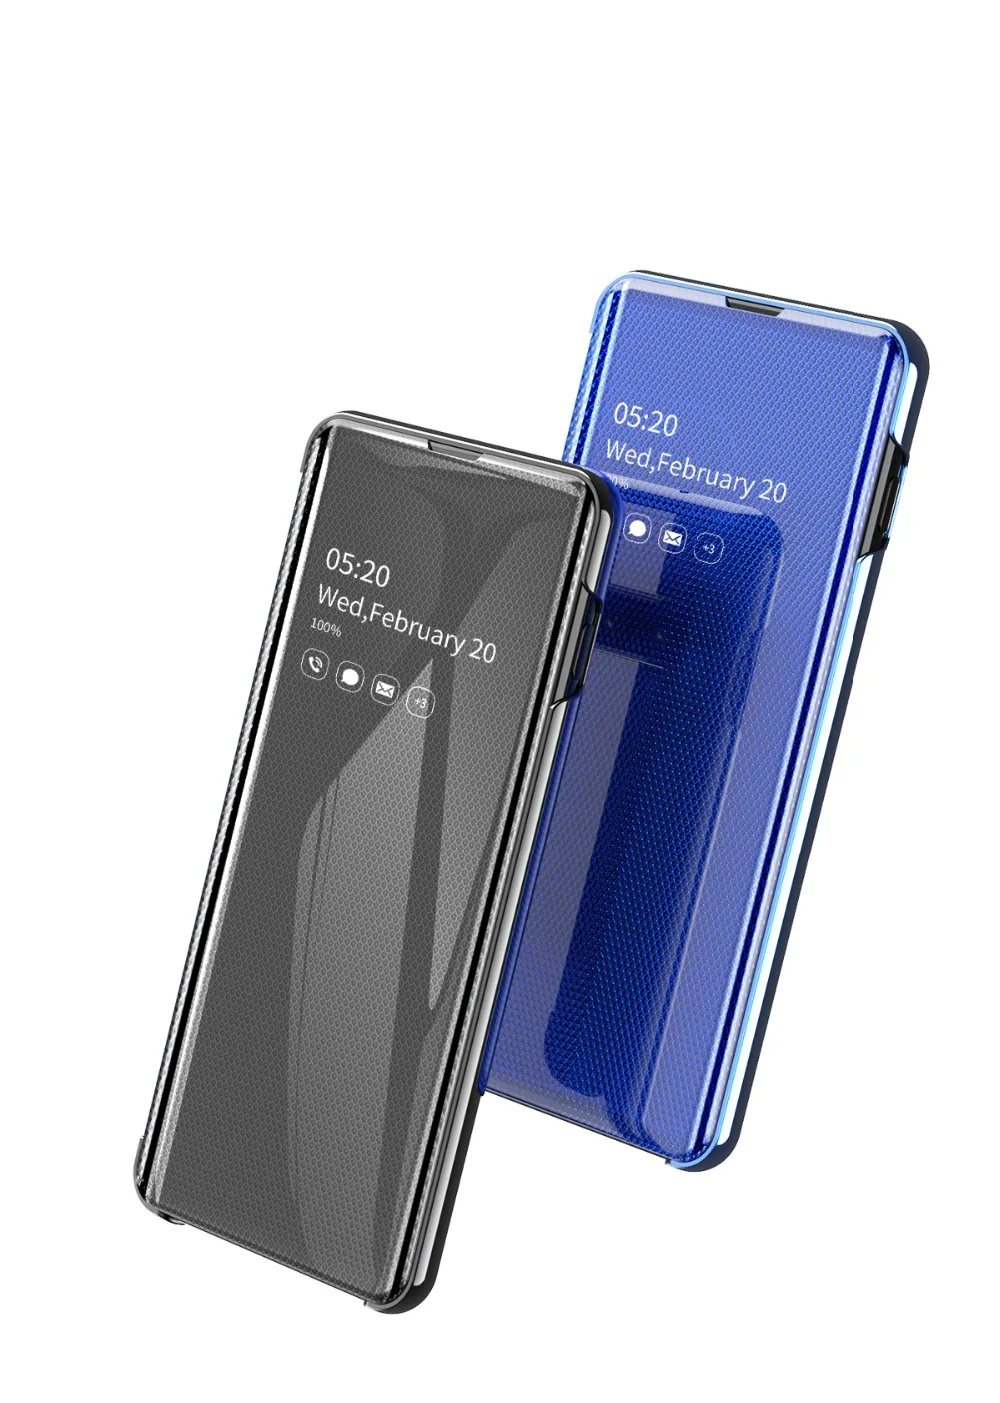 Умный зеркальный флип-чехол для Galaxy S10 S8 S9 Plus S10e S7 Edge Note 8 9 A50 A30 A70 A7 A750 чехол-подставка